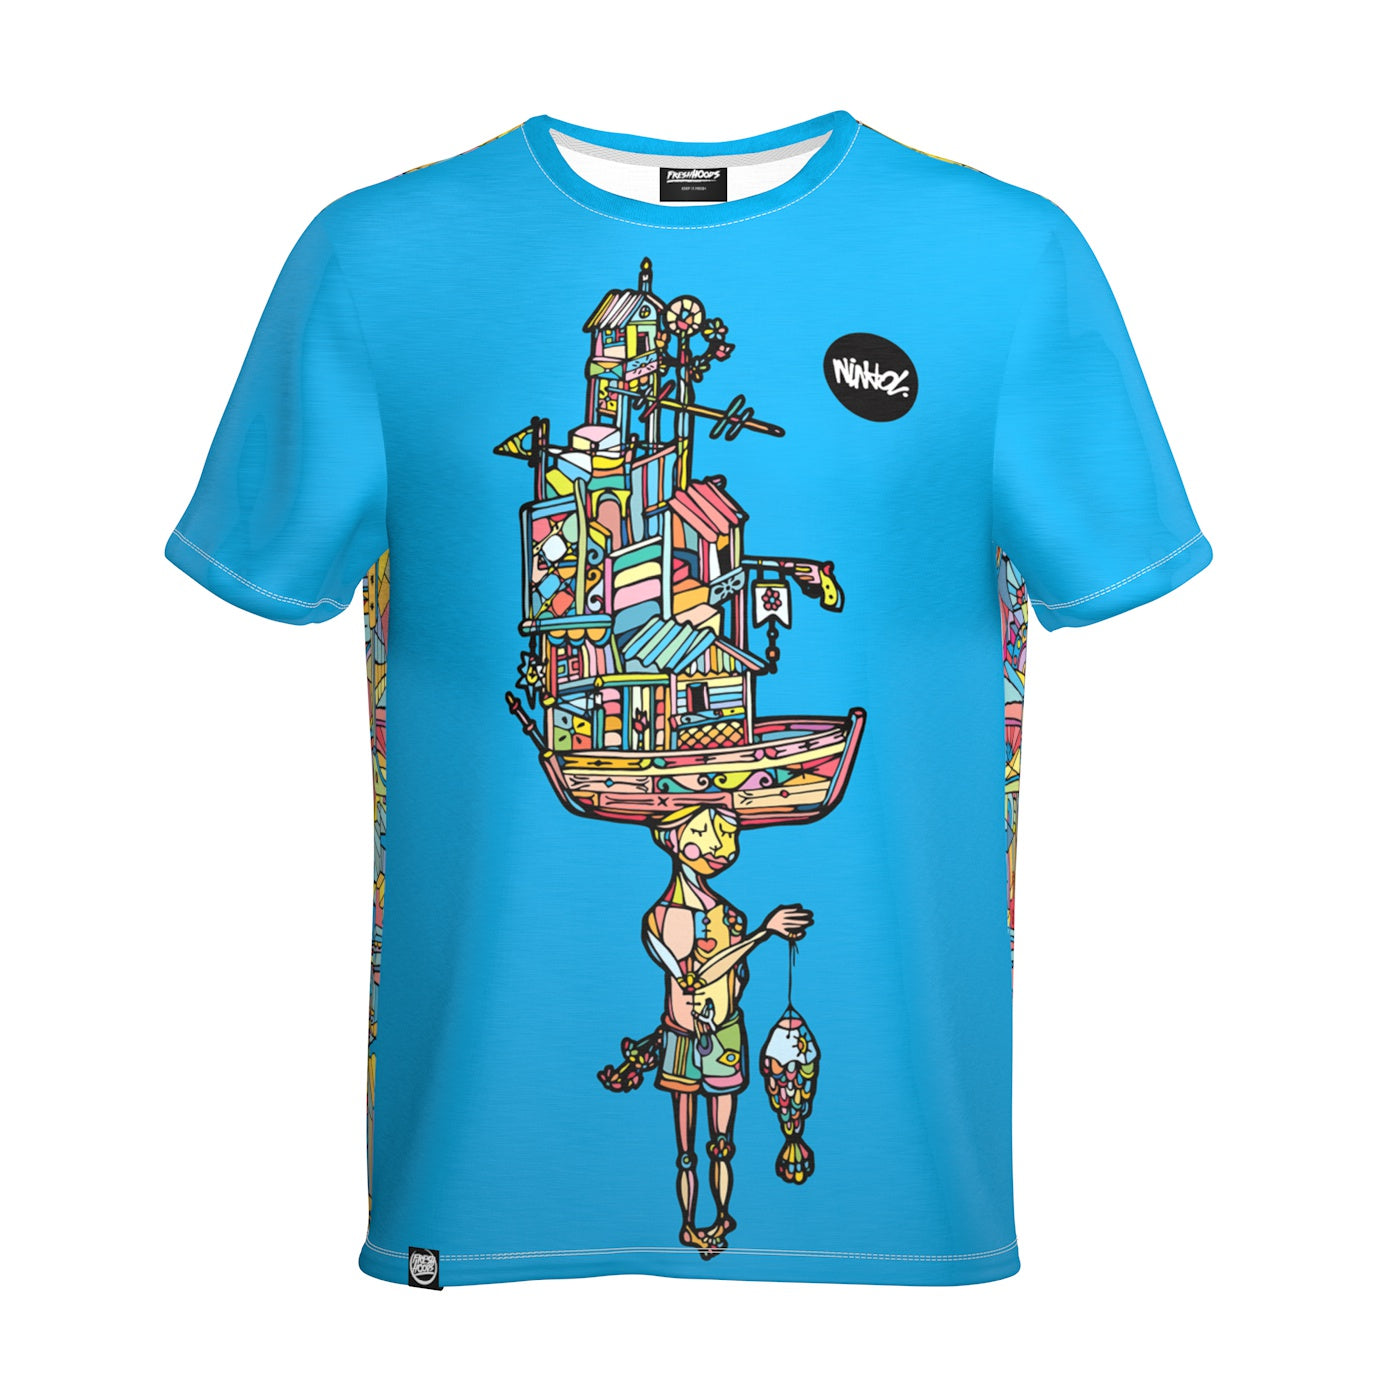 Favela T-Shirt